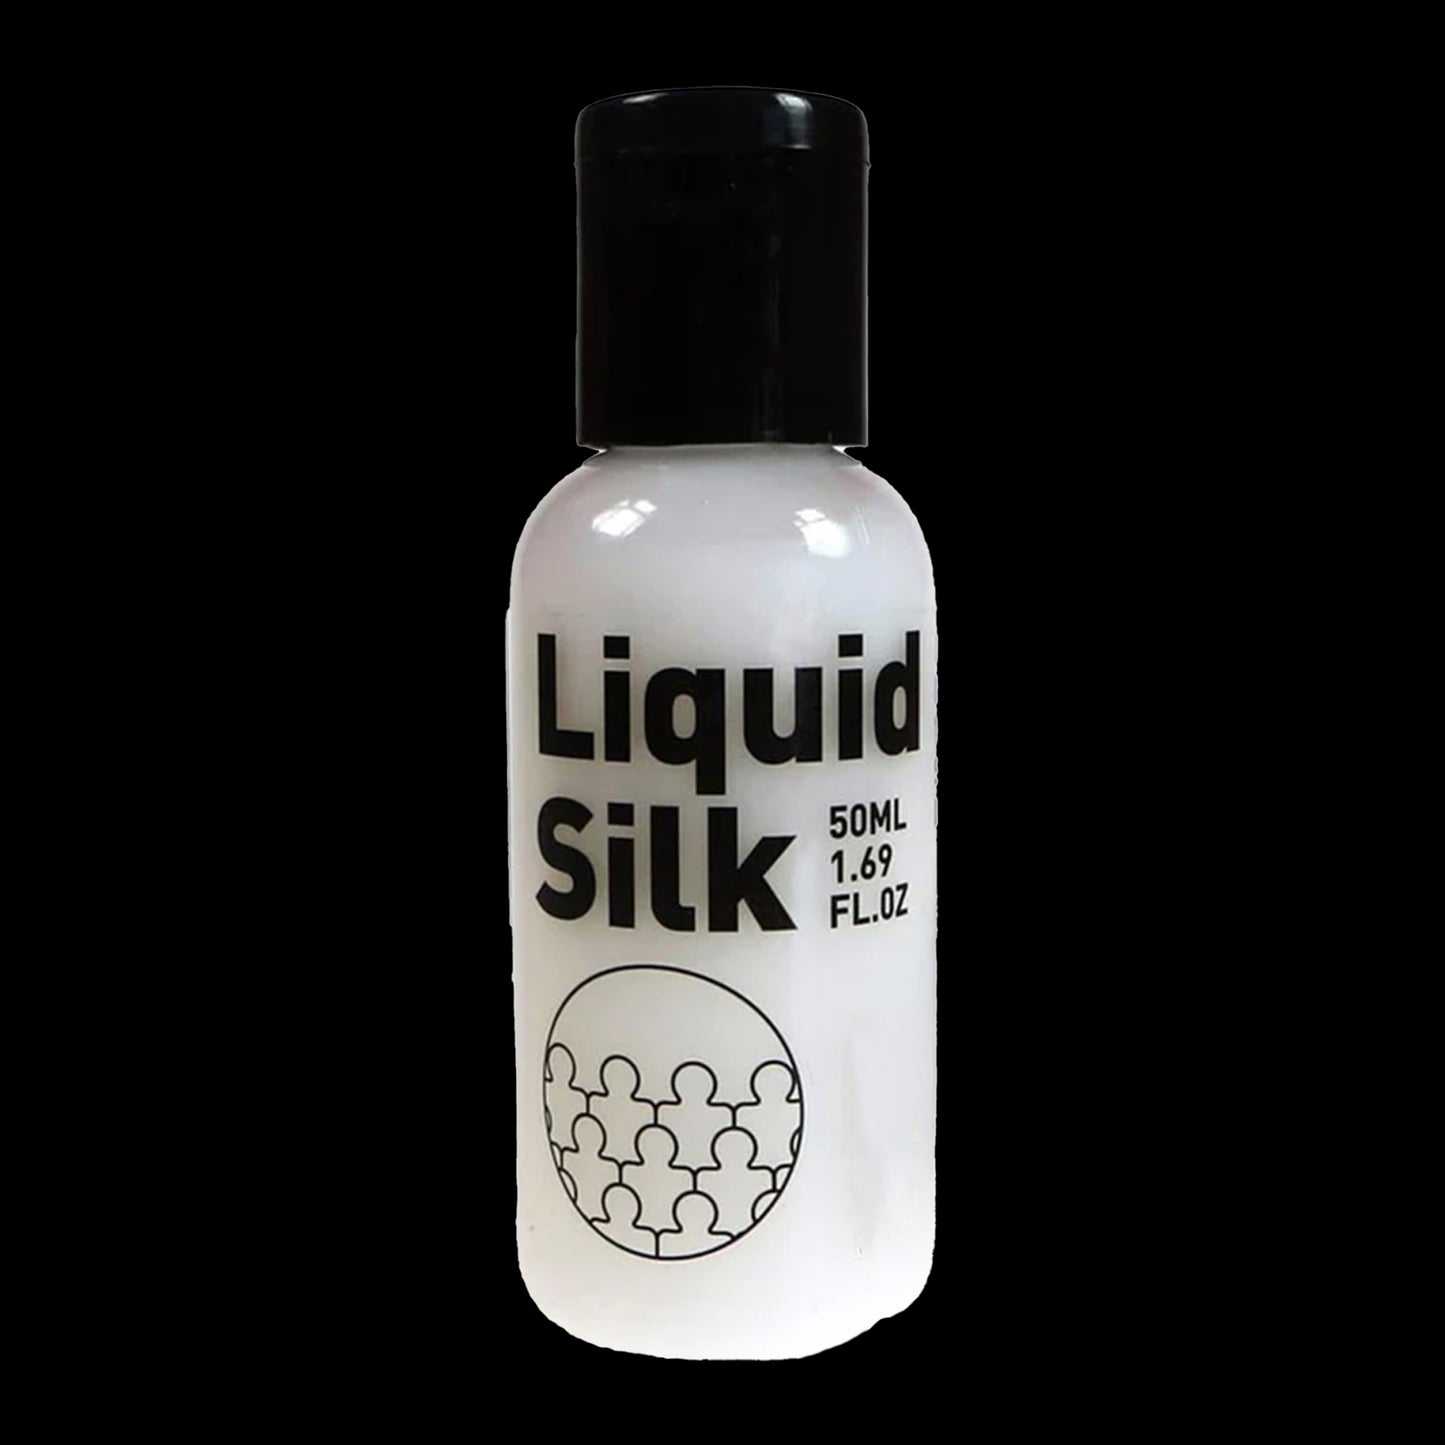 Liquid Silk Lubricant